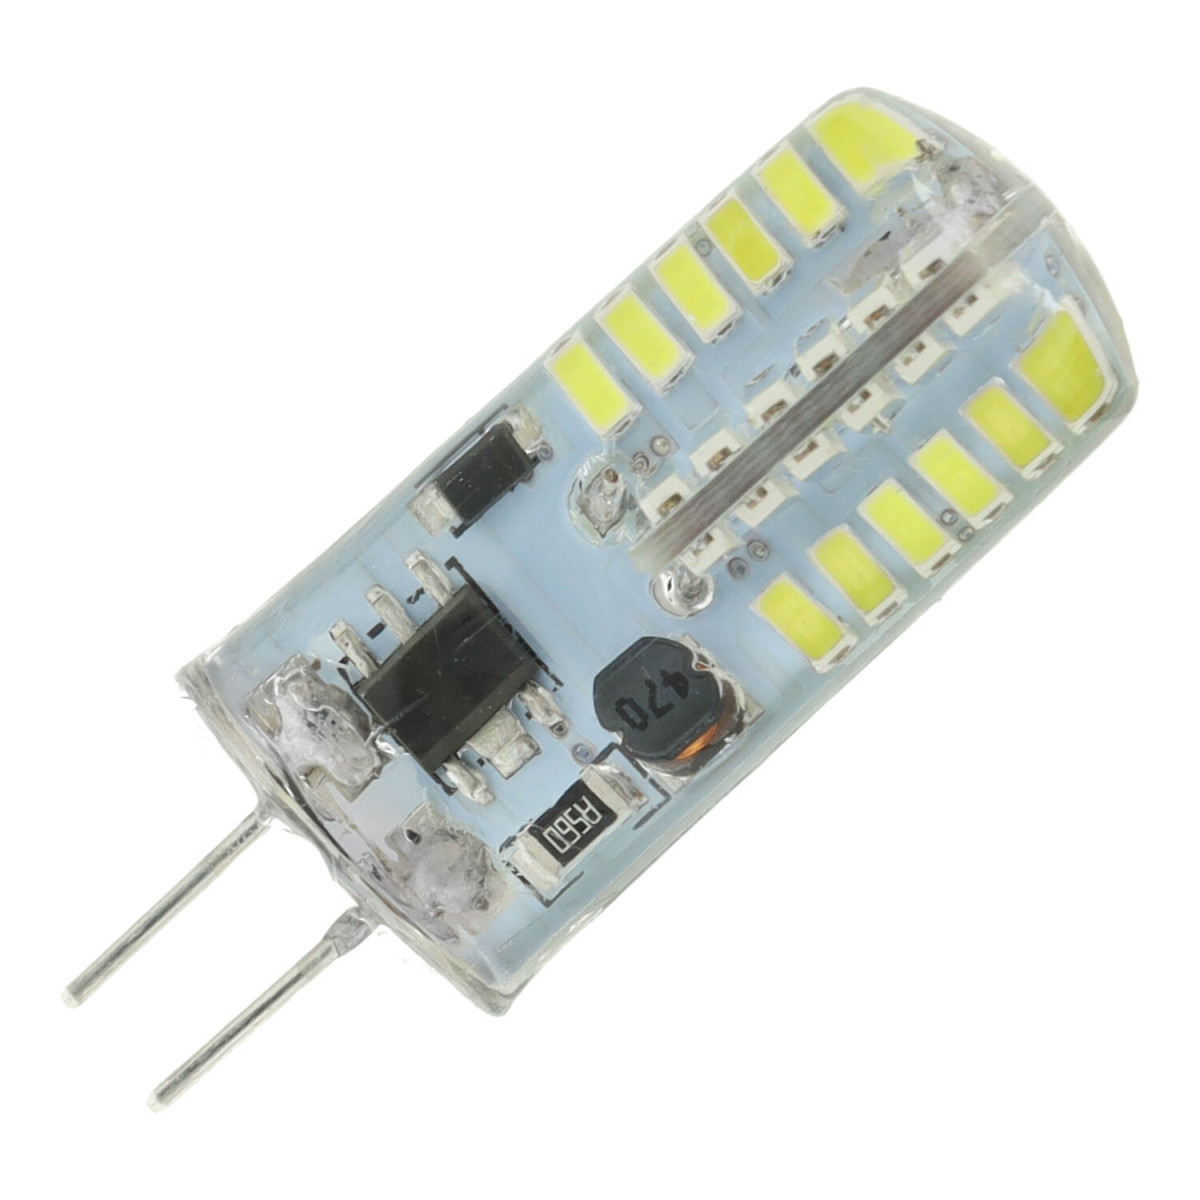 G4 Mini Led 4w Halogen Lamp, Led Bulbs G4 Cob Dimmable